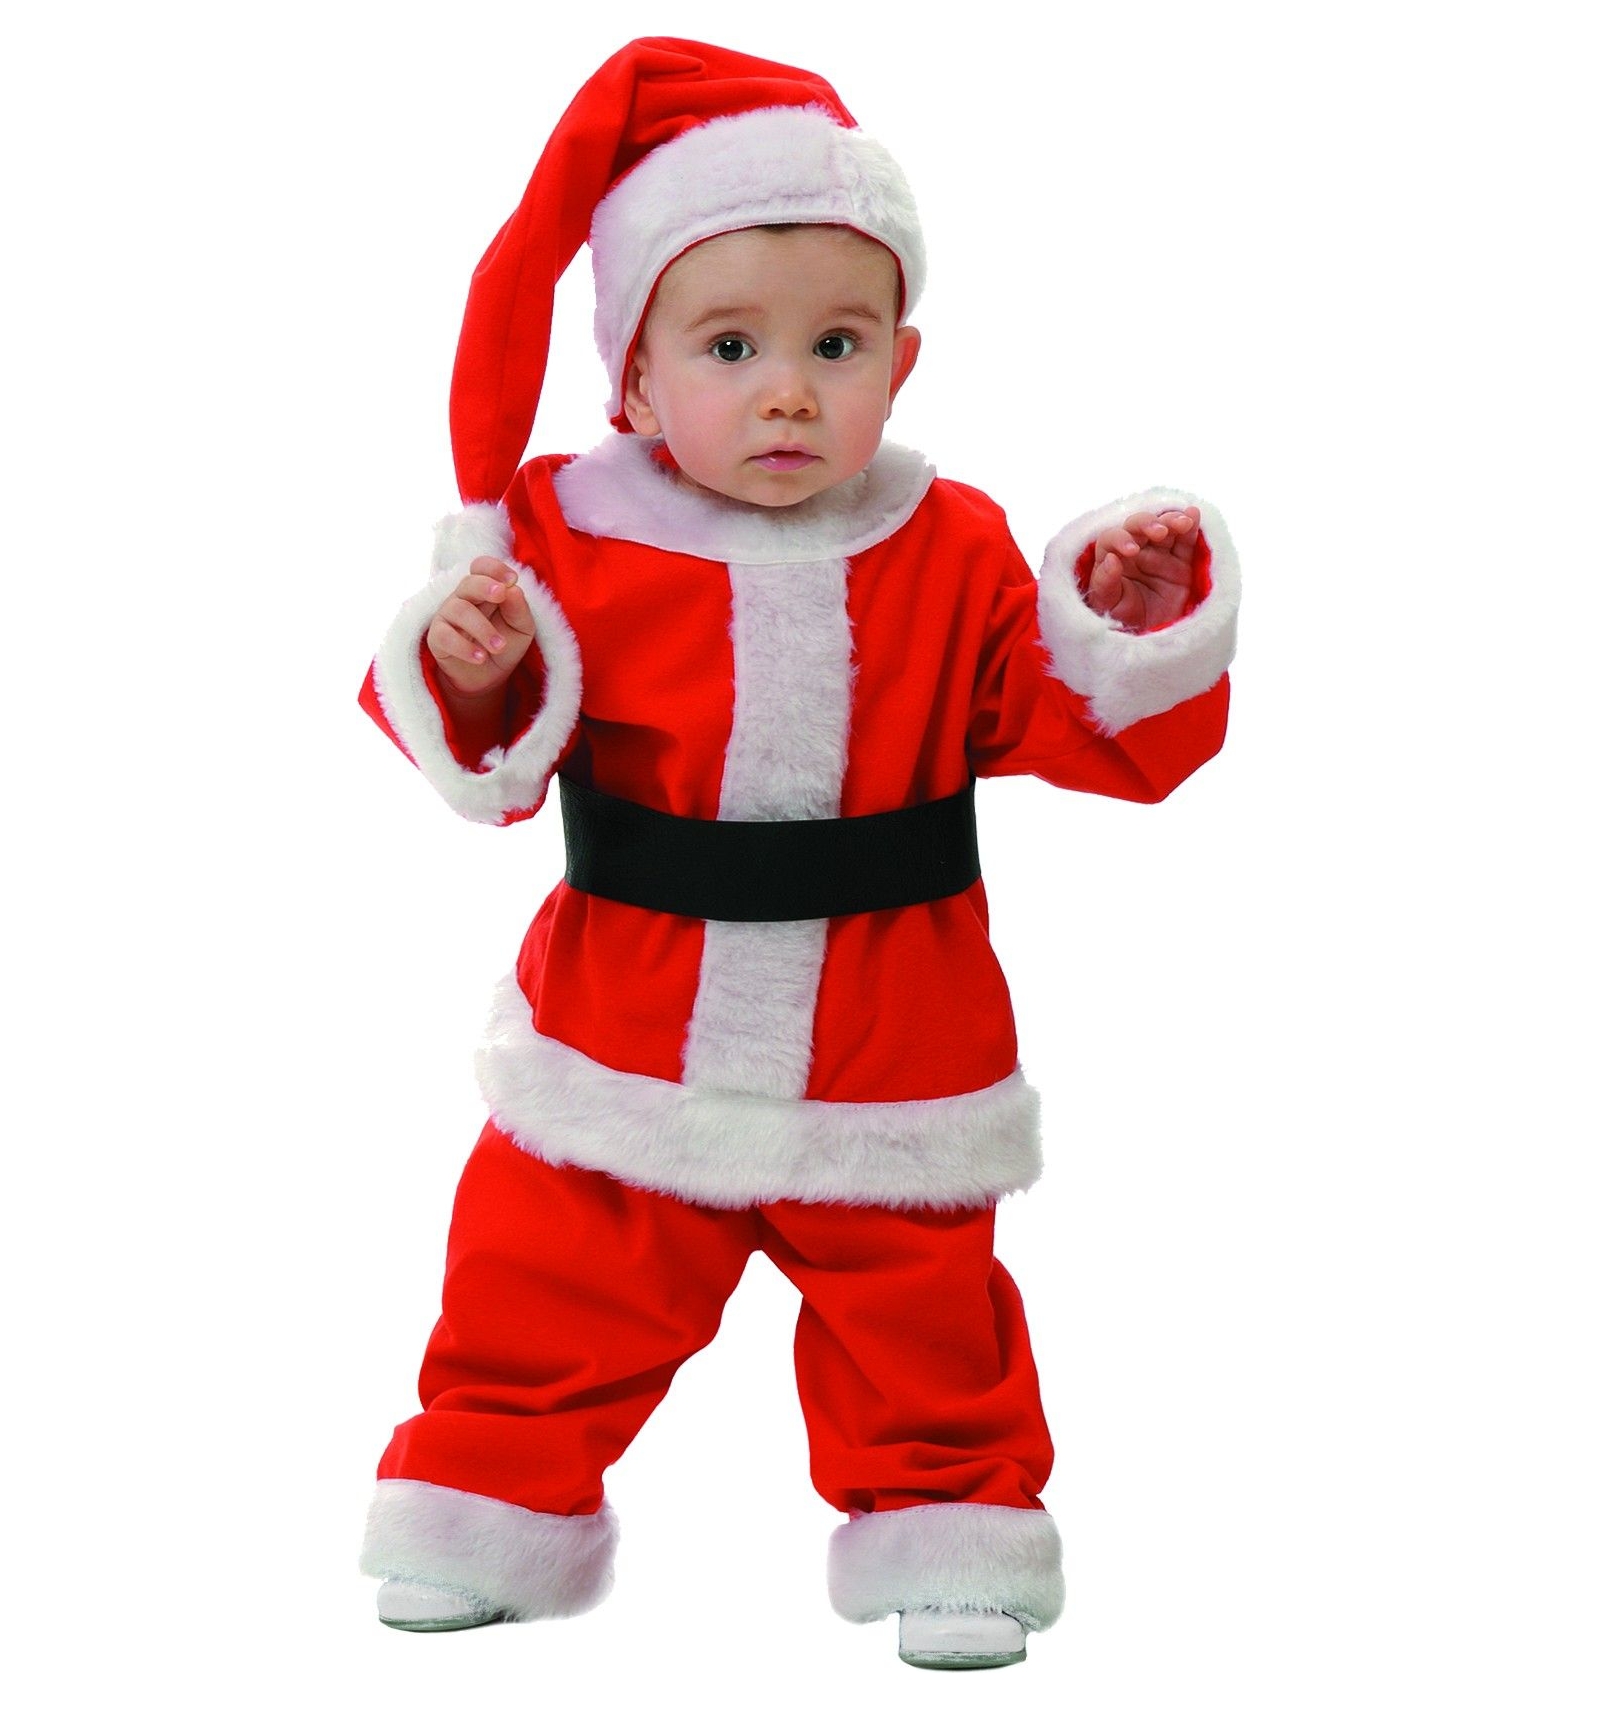 Santa Claus kids costume - Your Online Costume Store